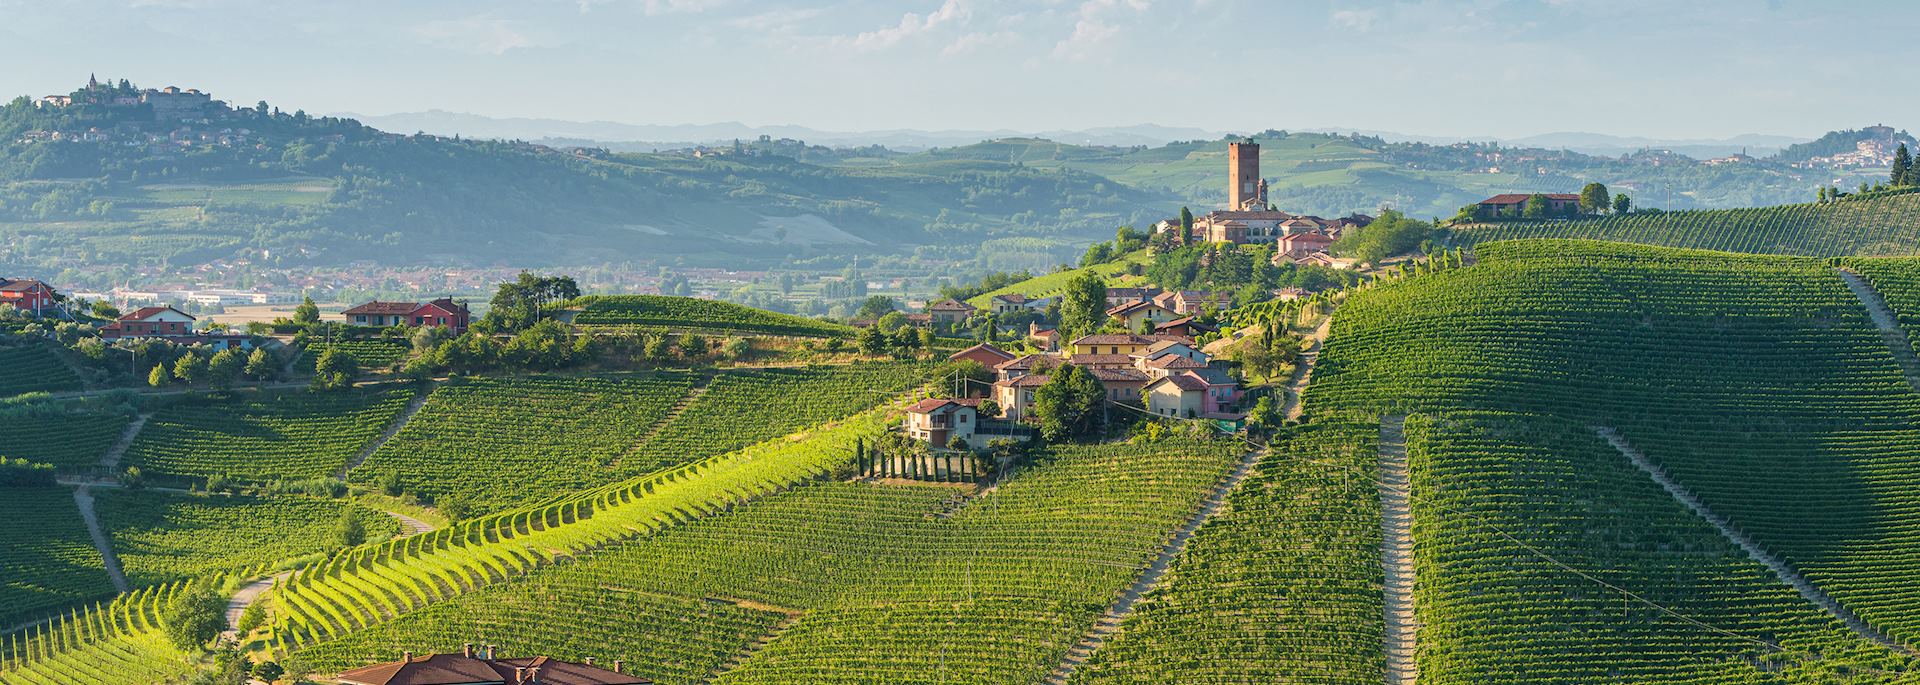 Vineyards in the Langhe region, Piedmont